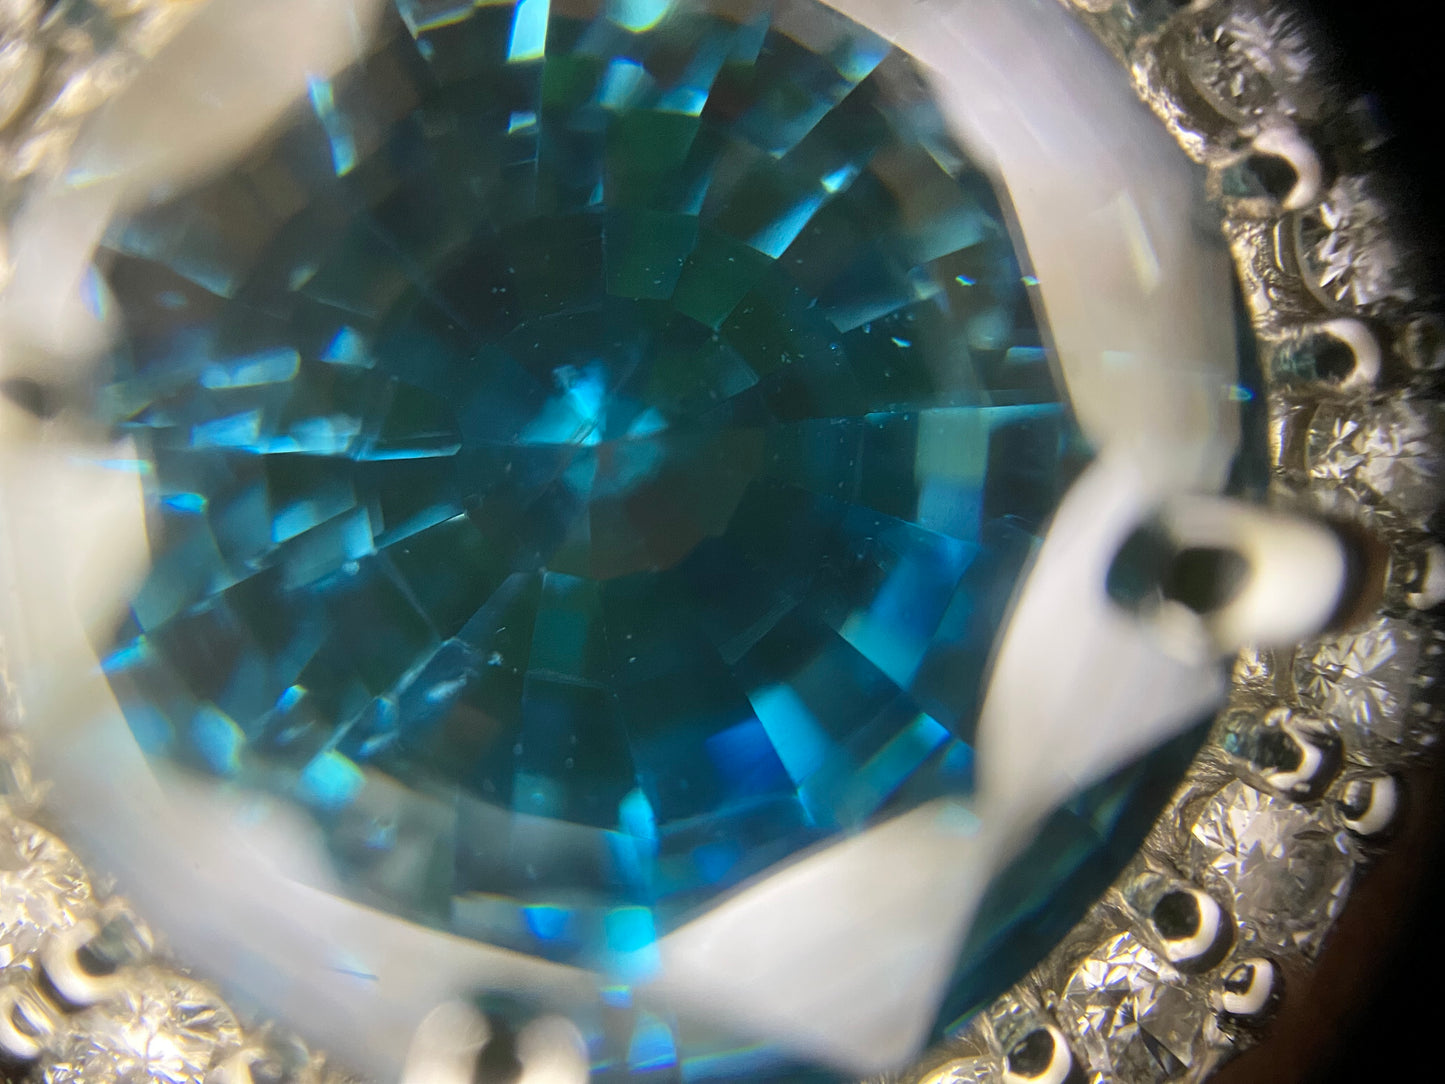 New] [Rare Stone] Blue Zircon Necklace Jewelry